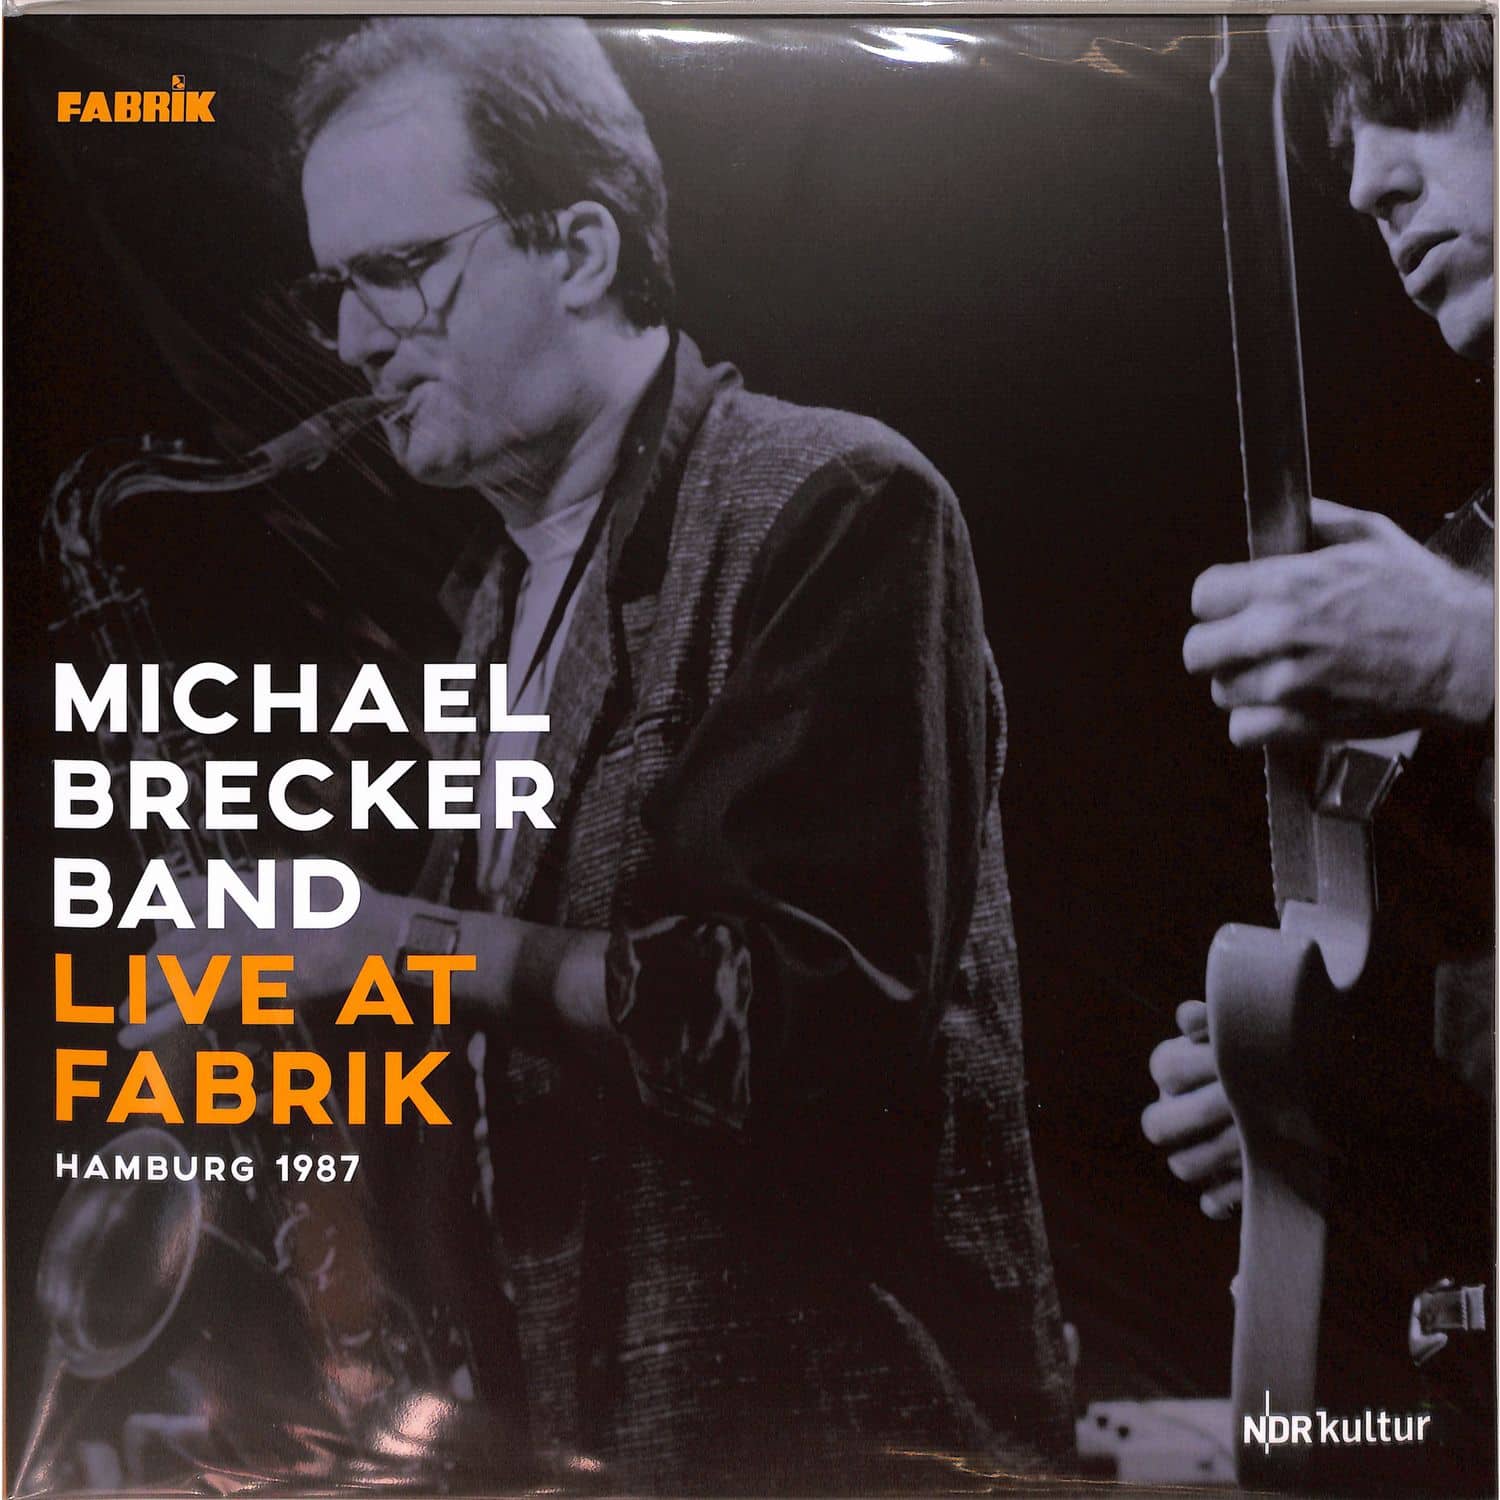 Michael Brecker Band - LIVE AT FABRIK HAMBURG 1987 